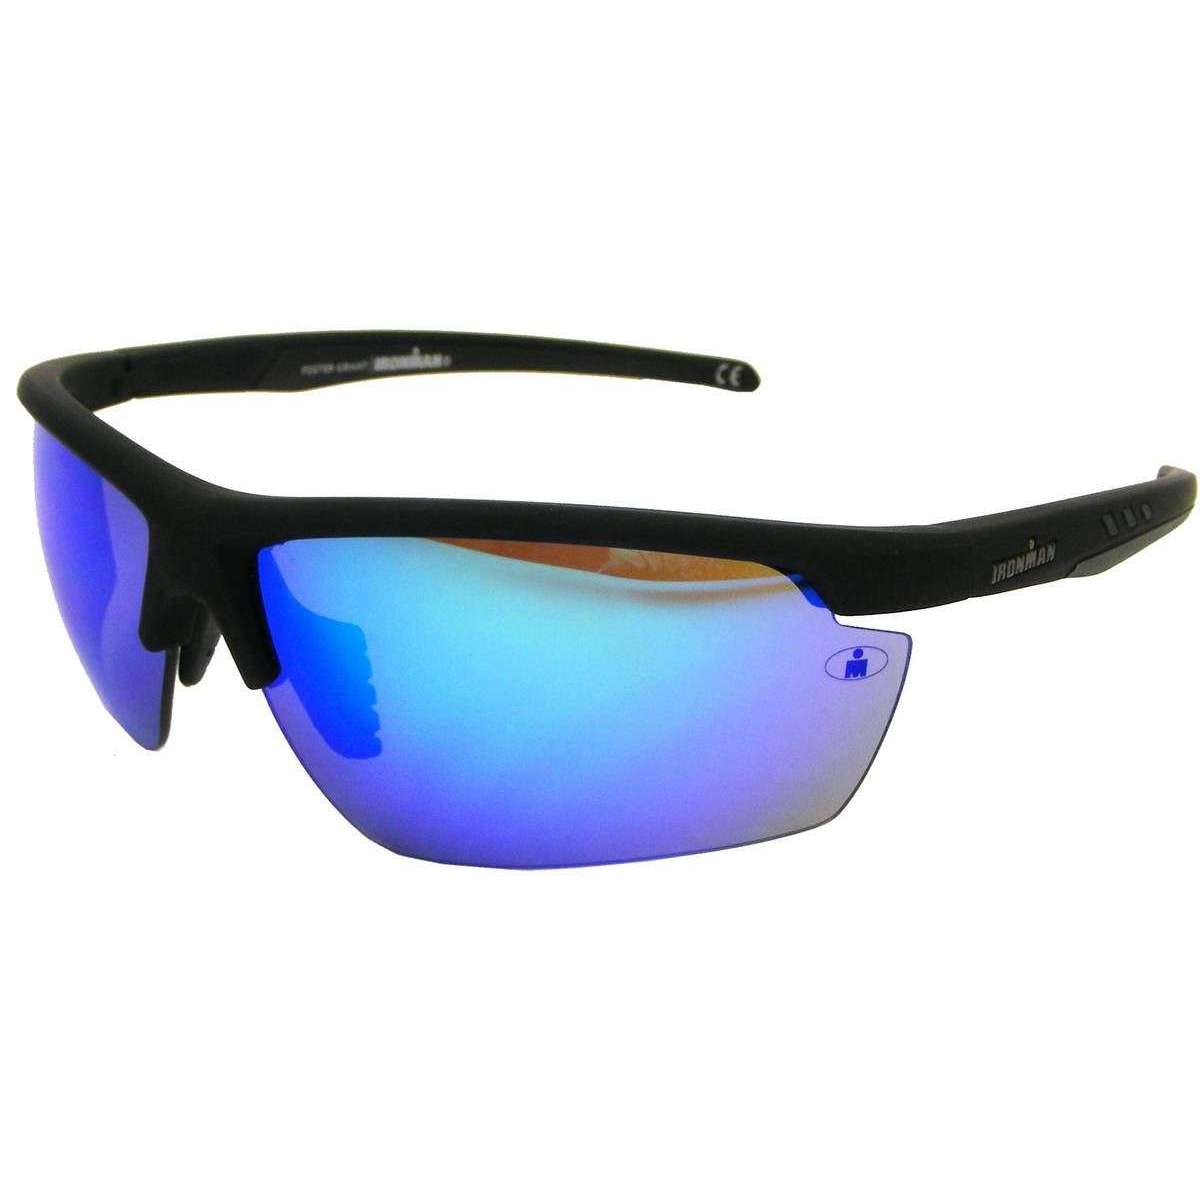 Iron Man Vitality Sunglasses - Black/Blue